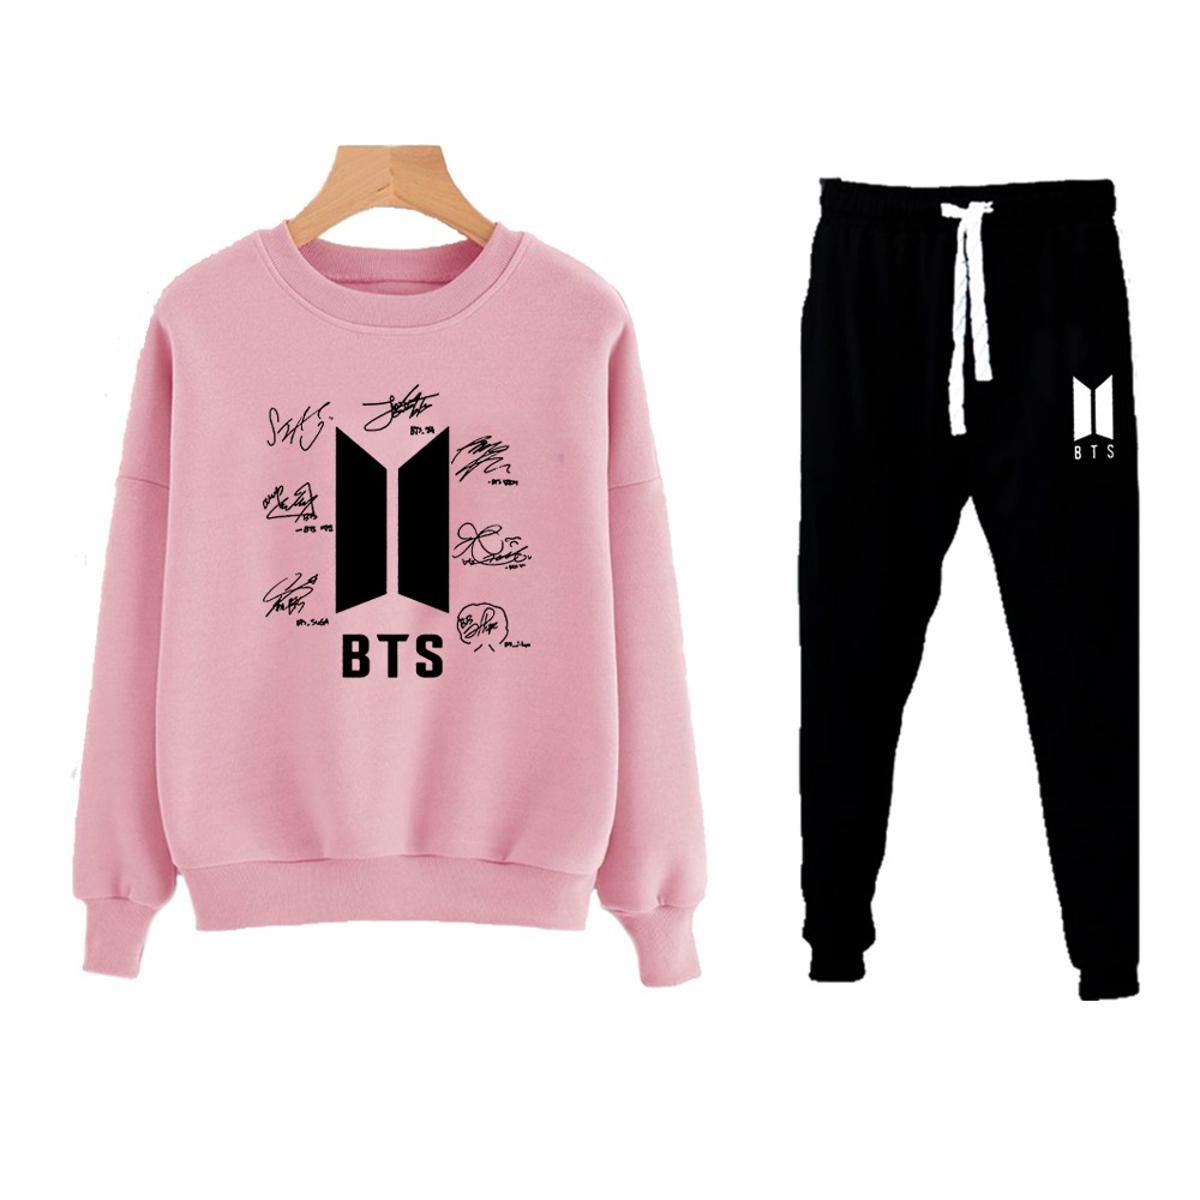 Buy Tracksuit BTS SIGN Print Thick & Fleece Fabric Sweatshirt with